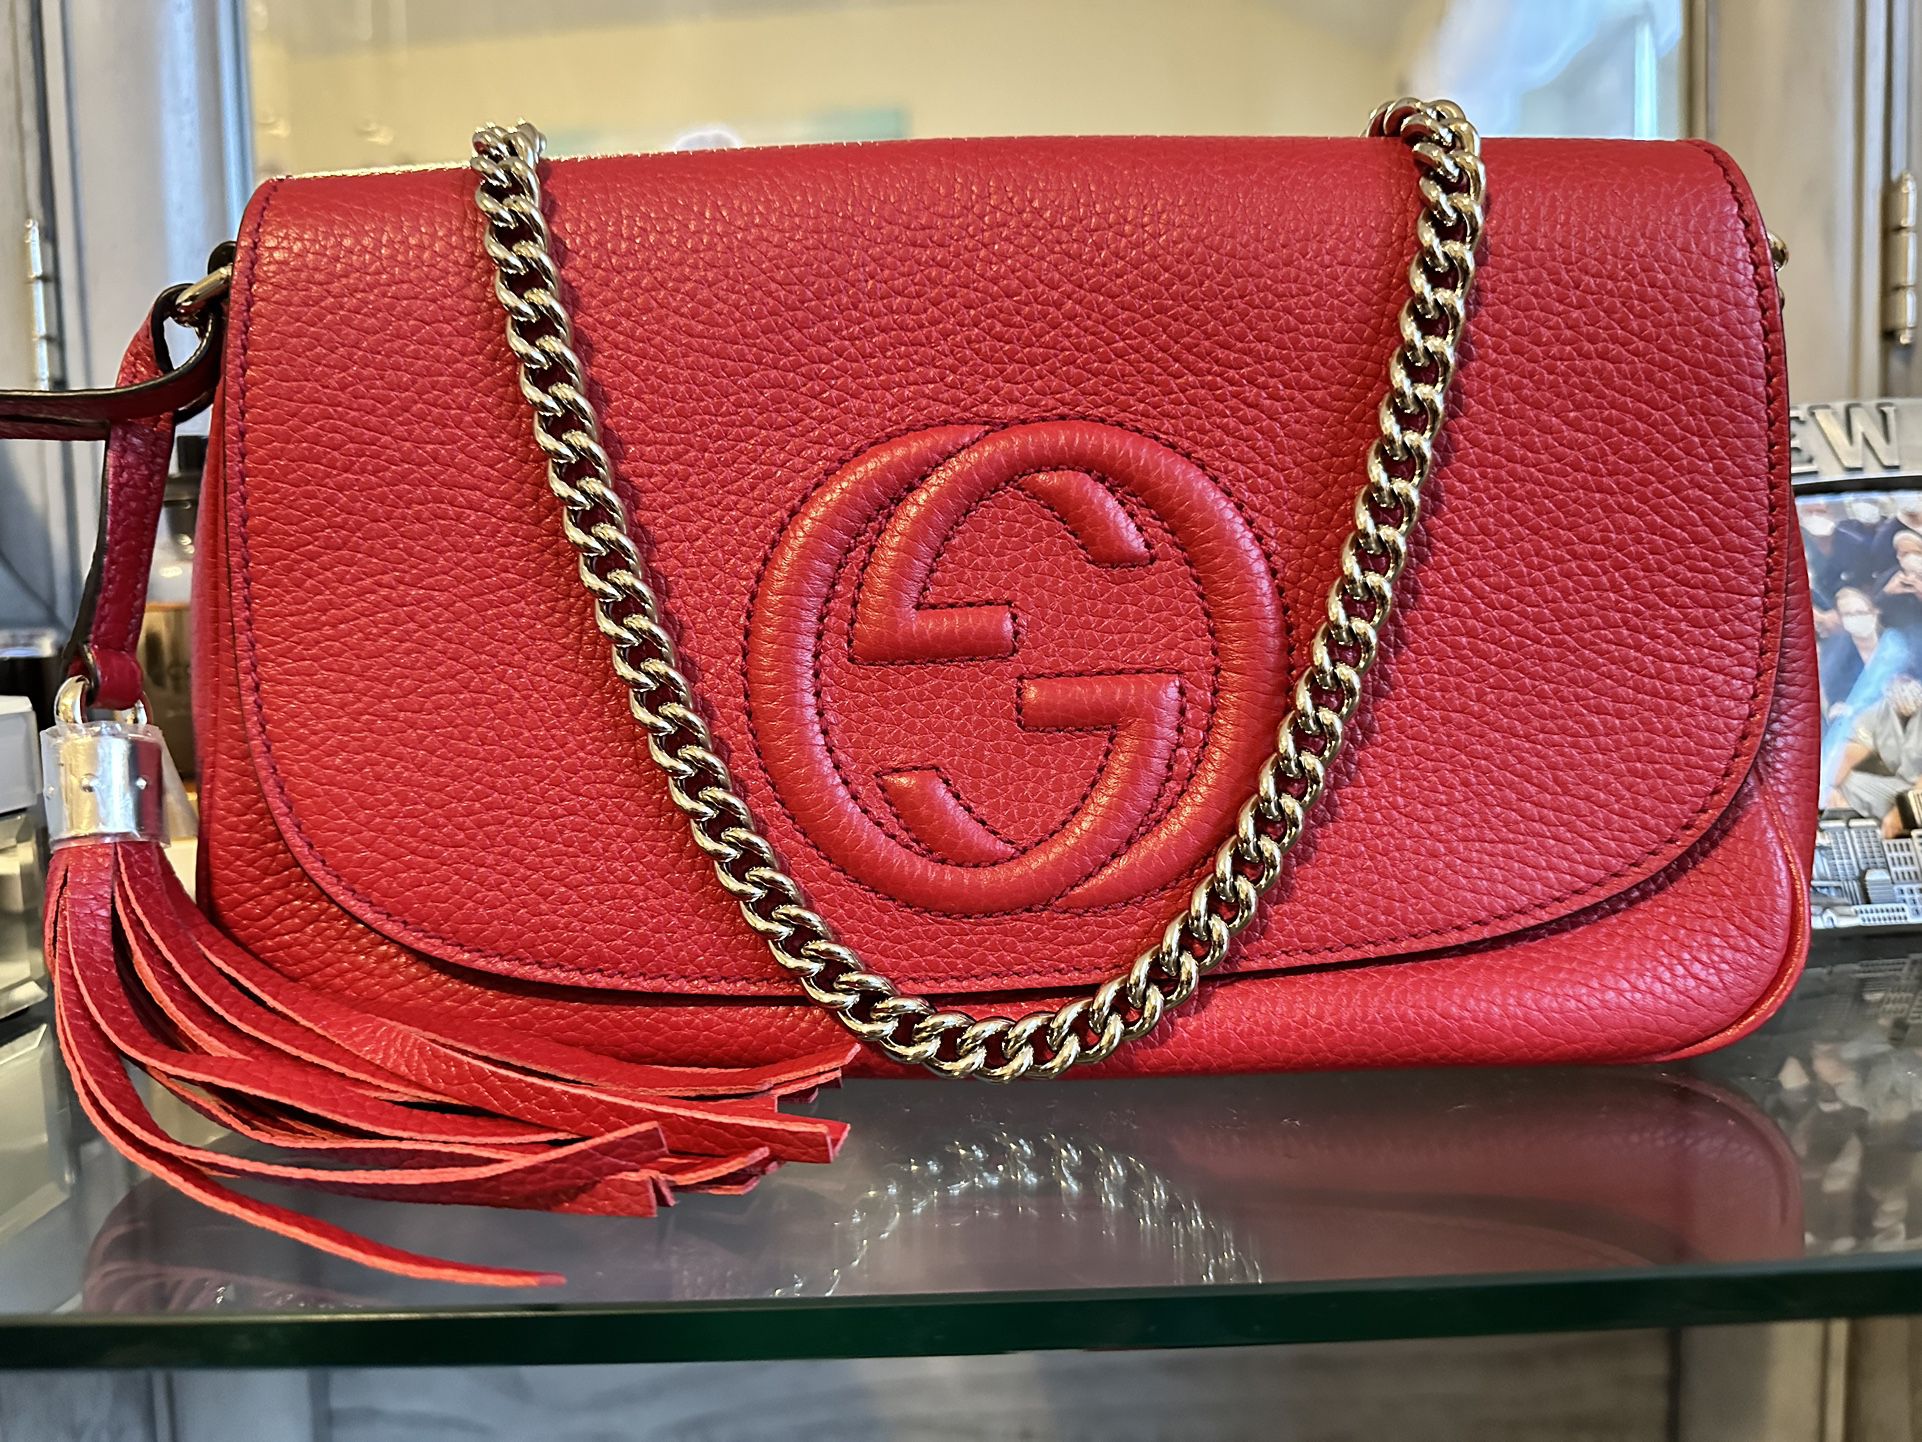 Gucci Soho Disco Crossbody Bag Camelia Tan Beige Pebbled Leather $1,390